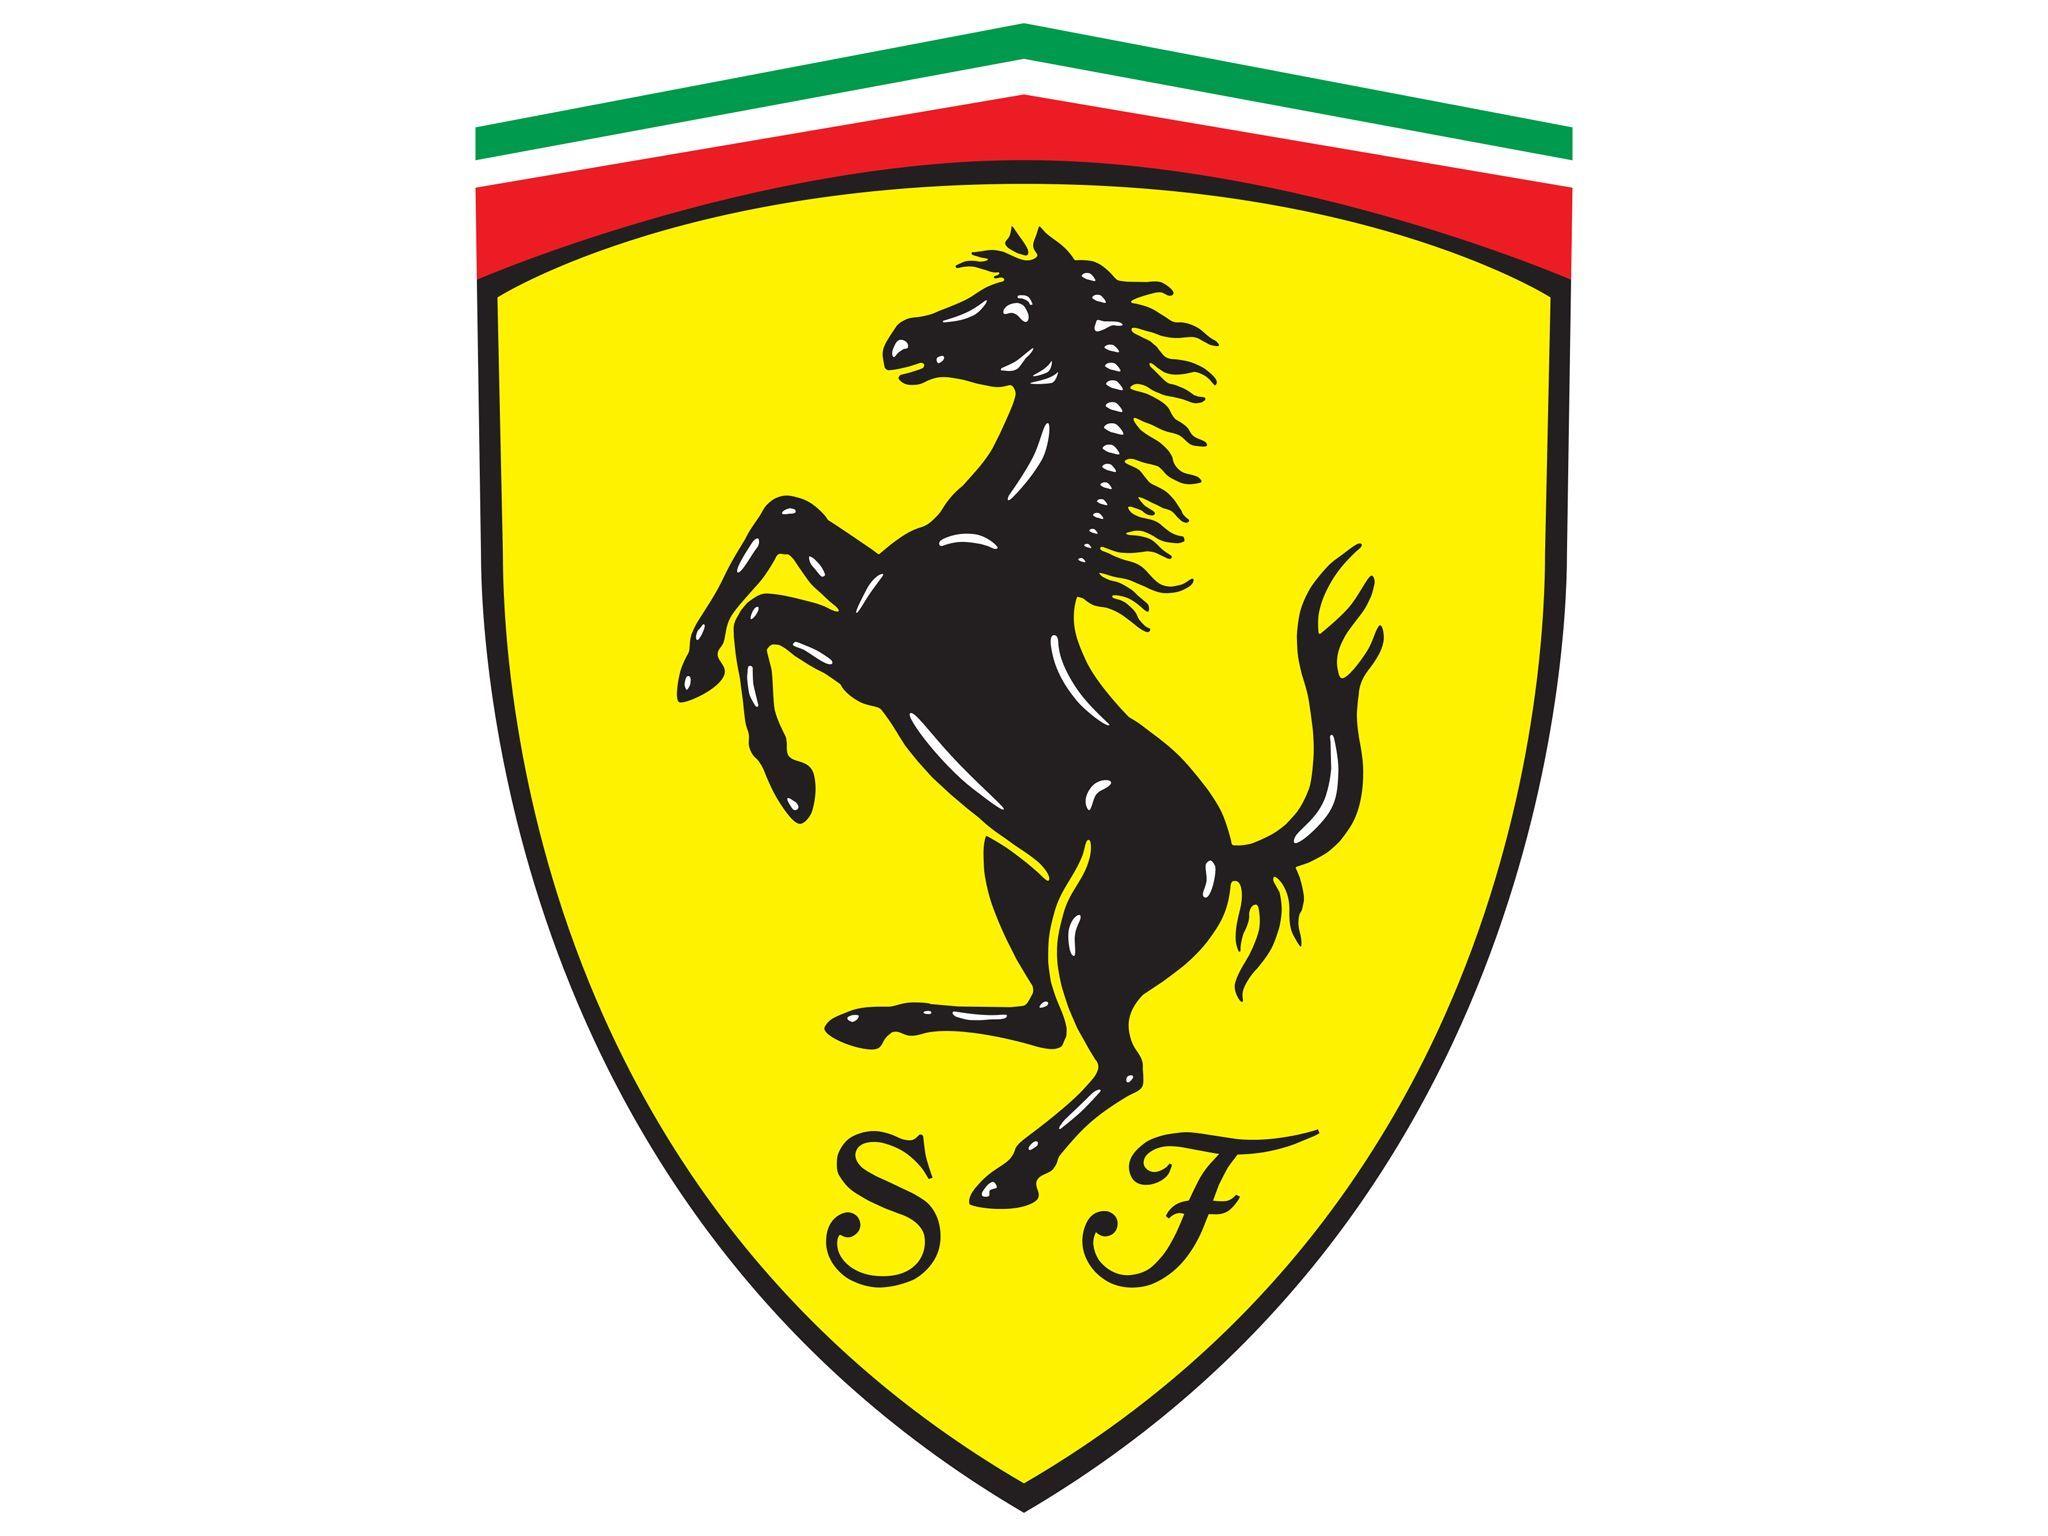 Stallion Car Logo - Ferrari Logo, Ferrari Car Symbol Meaning and History. Car Brand